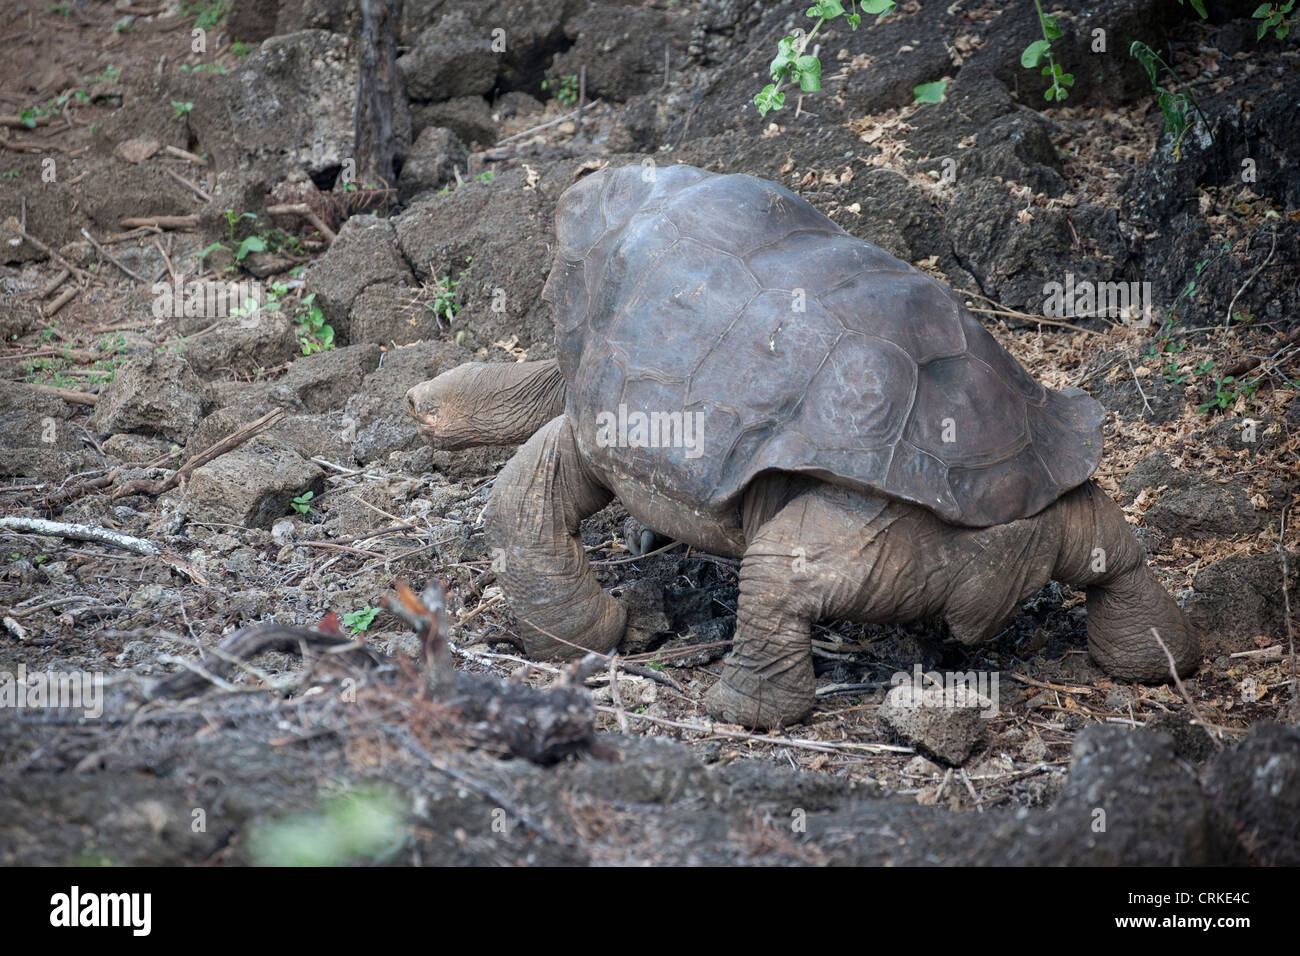 Lonesome George, die letzten Pinta Island Galapagos-Schildkröte, starb am 24. Juni 2012. Stockfoto